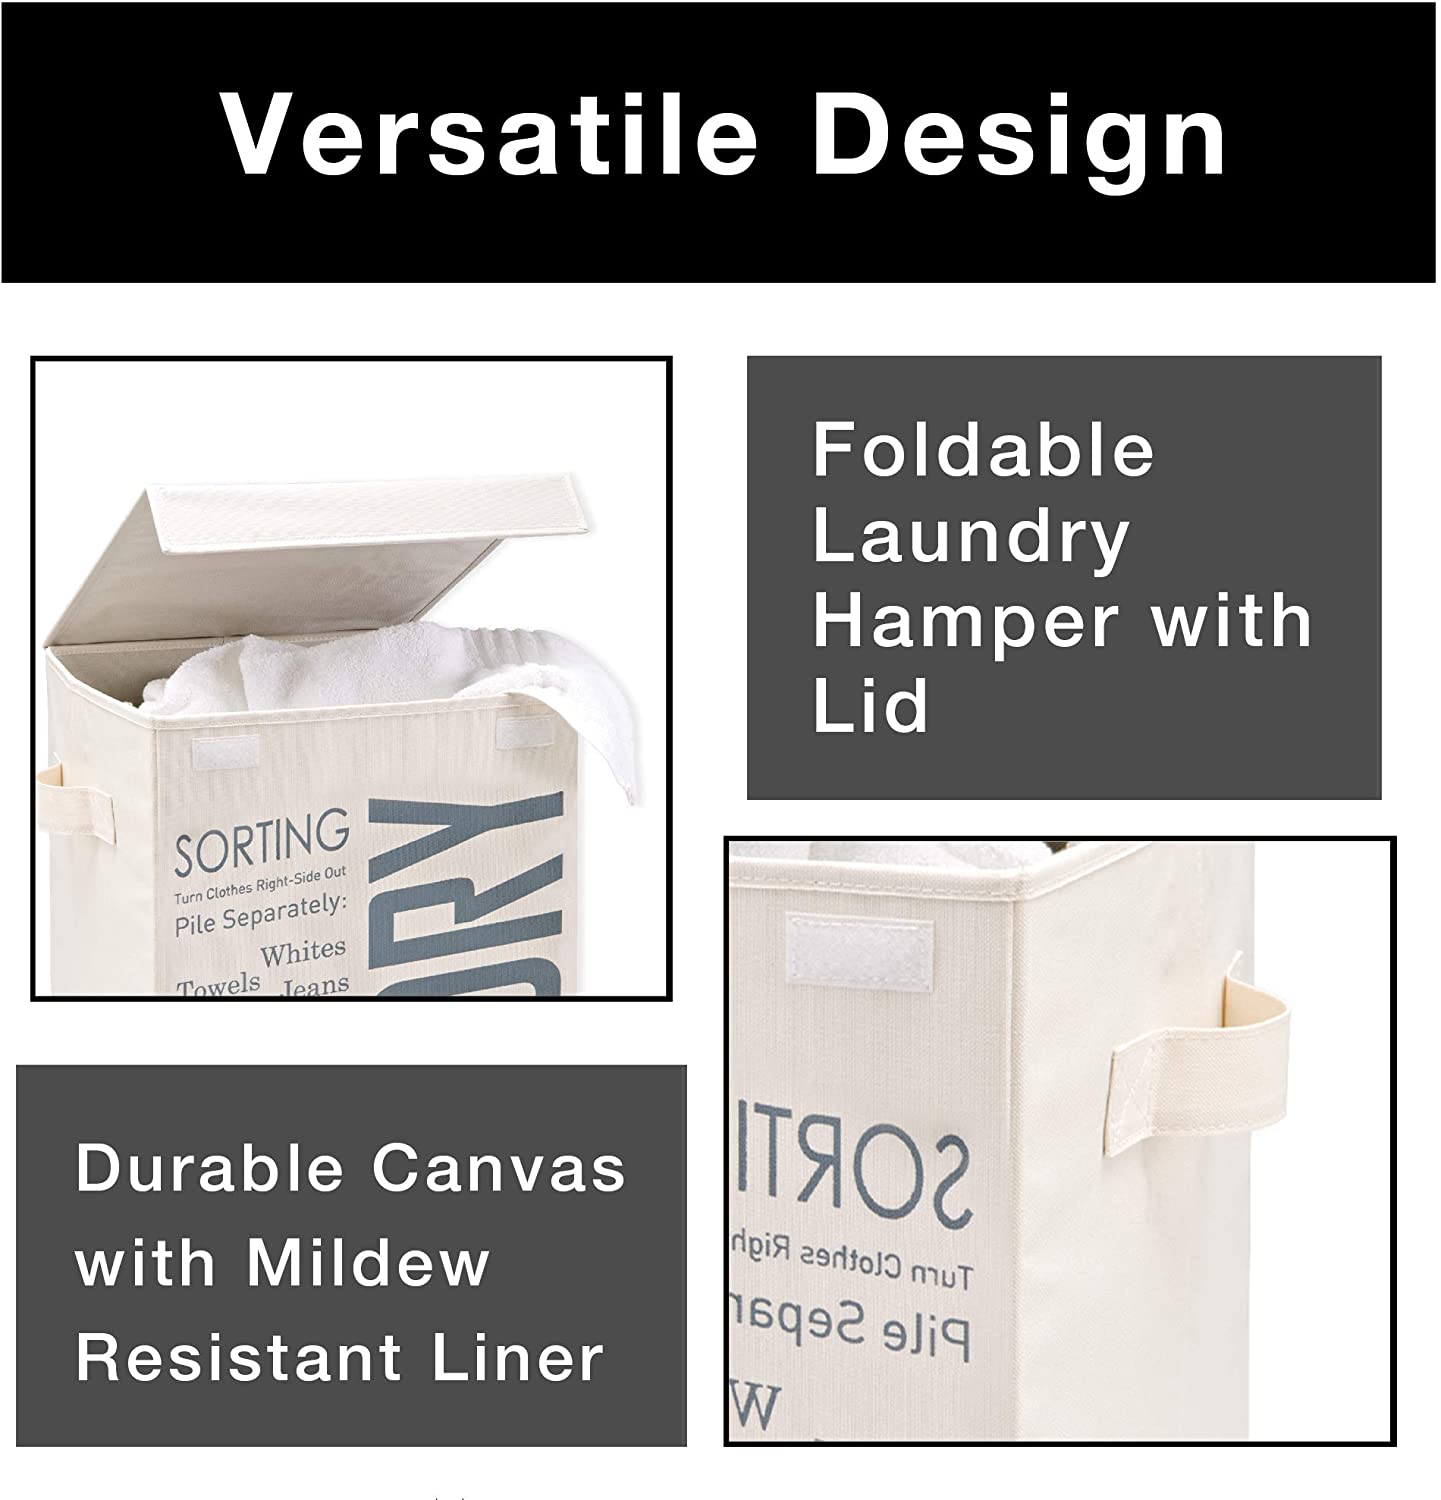 Foldable Laundry Hamper with Lid and Logo Design - Smart Design® 4